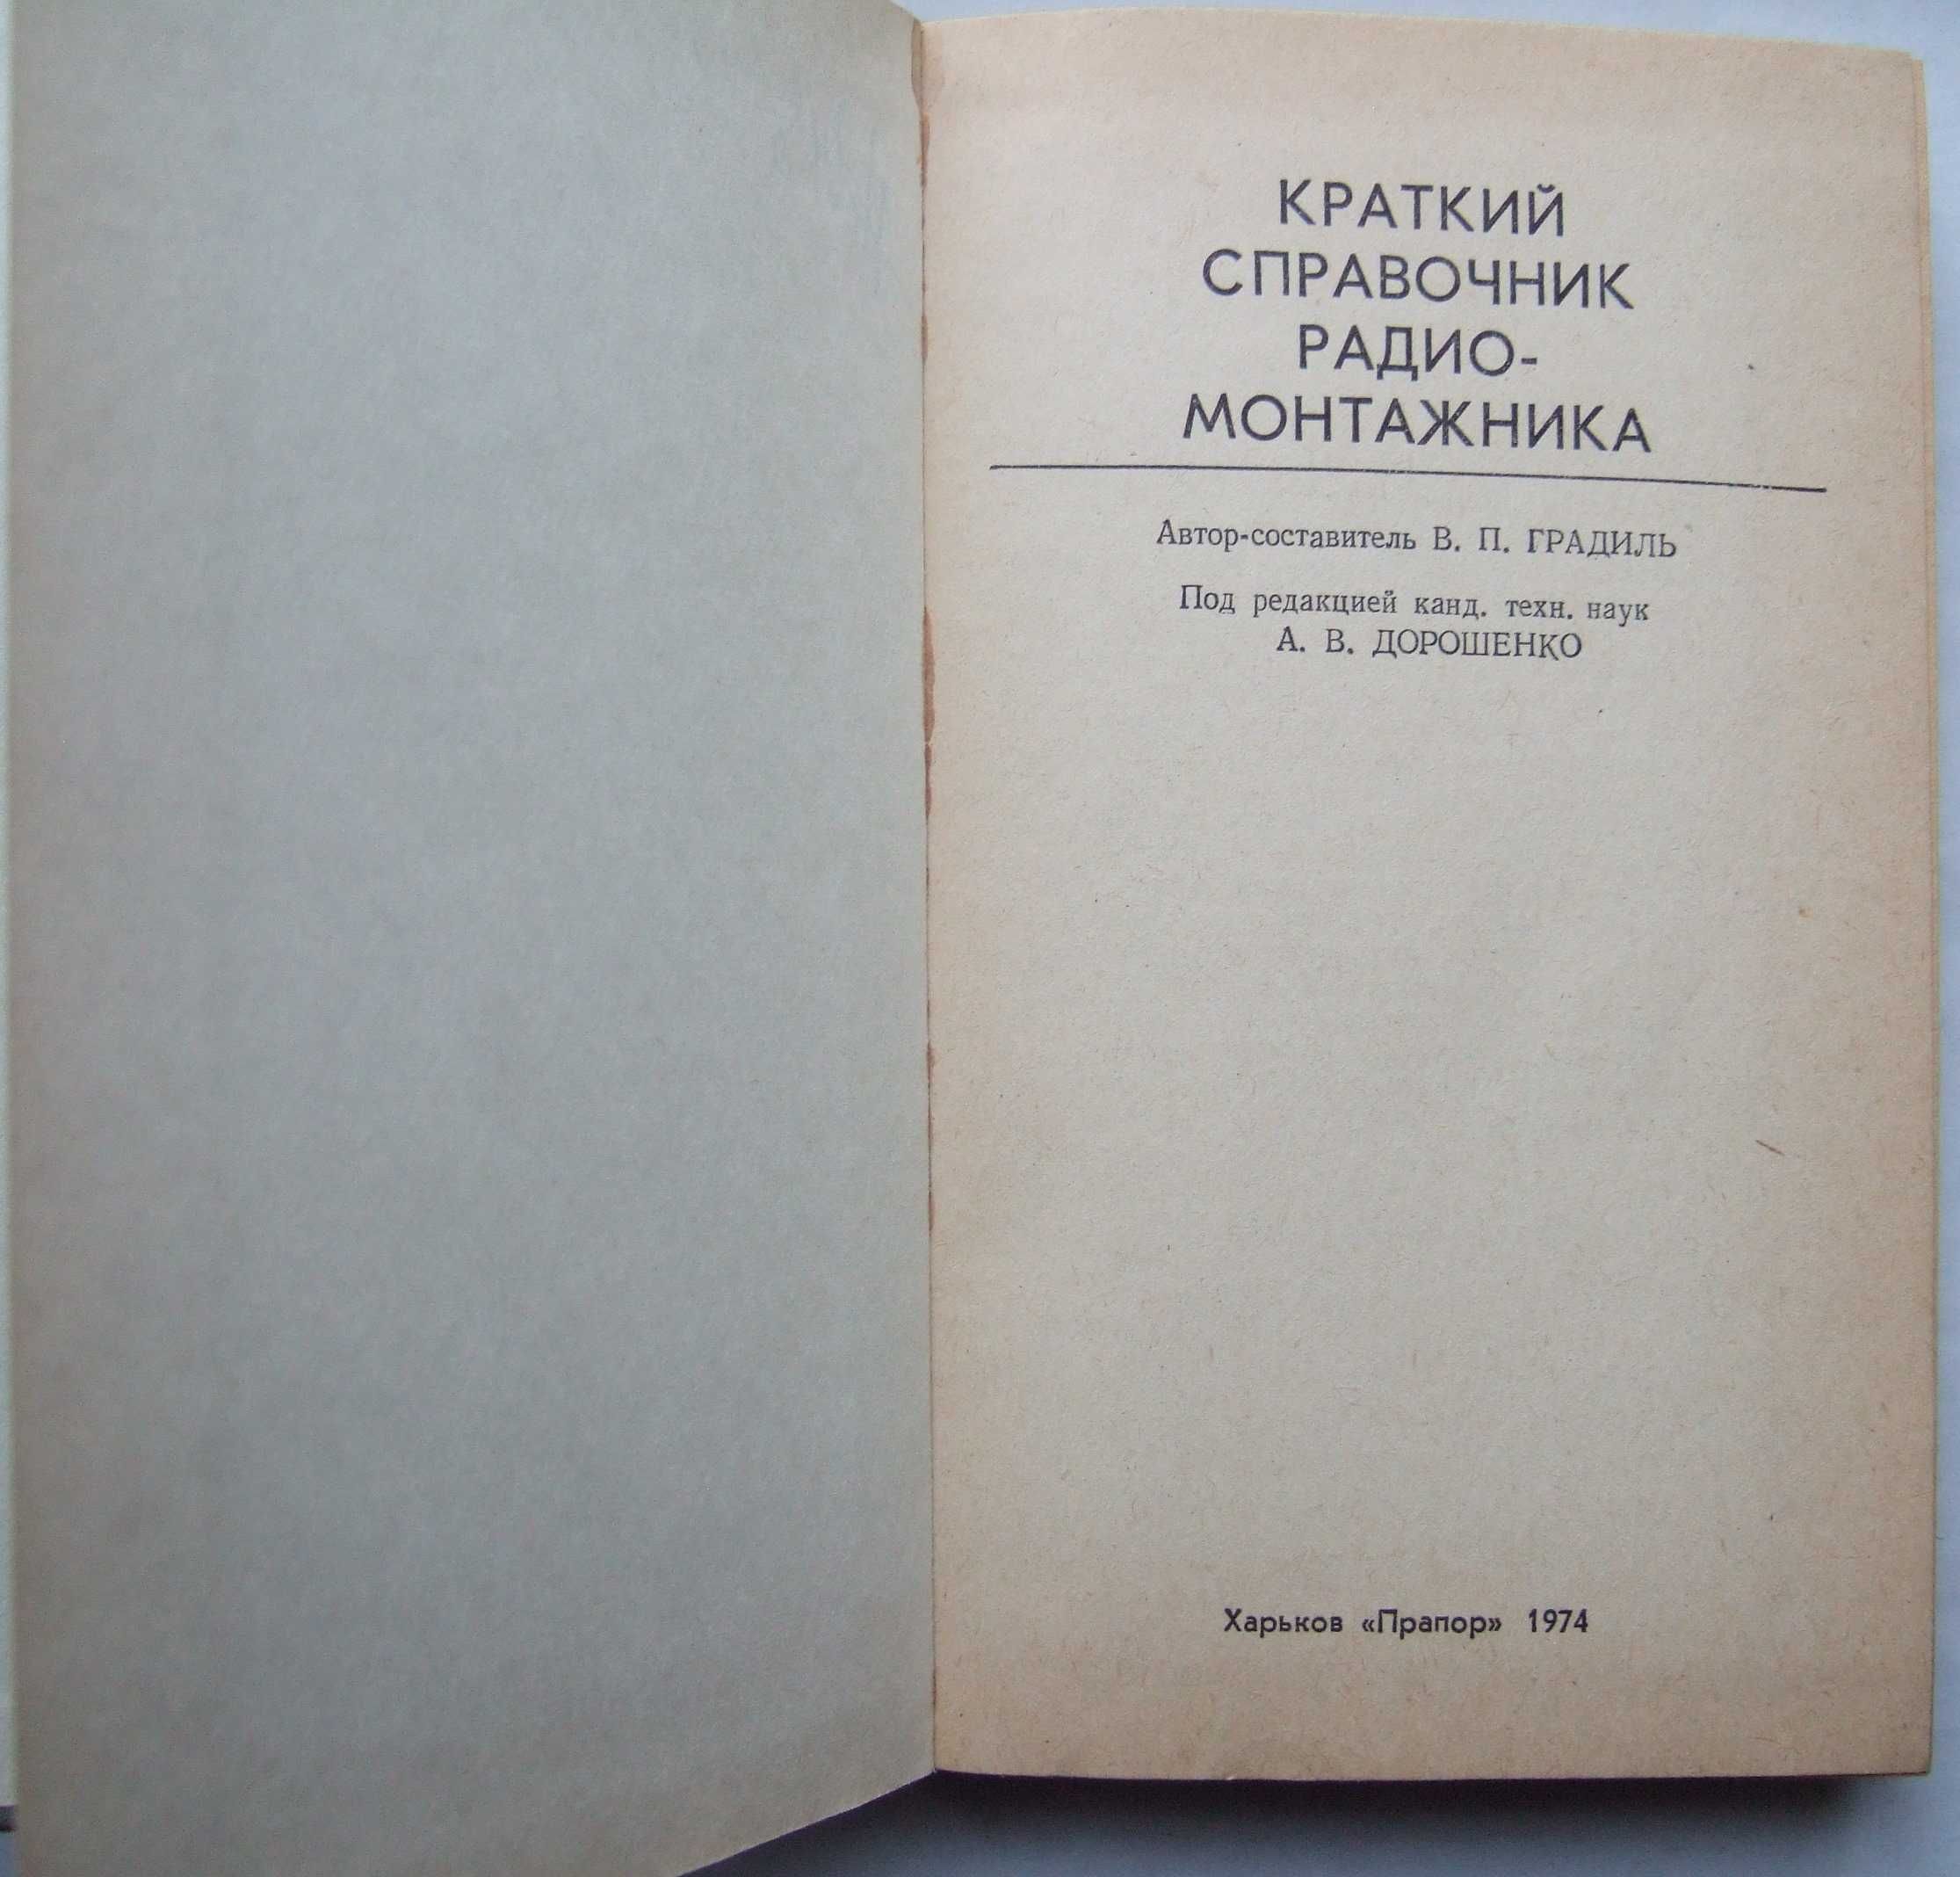 Краткий справочник радиомонтажника. 1974 рік, тираж 65000